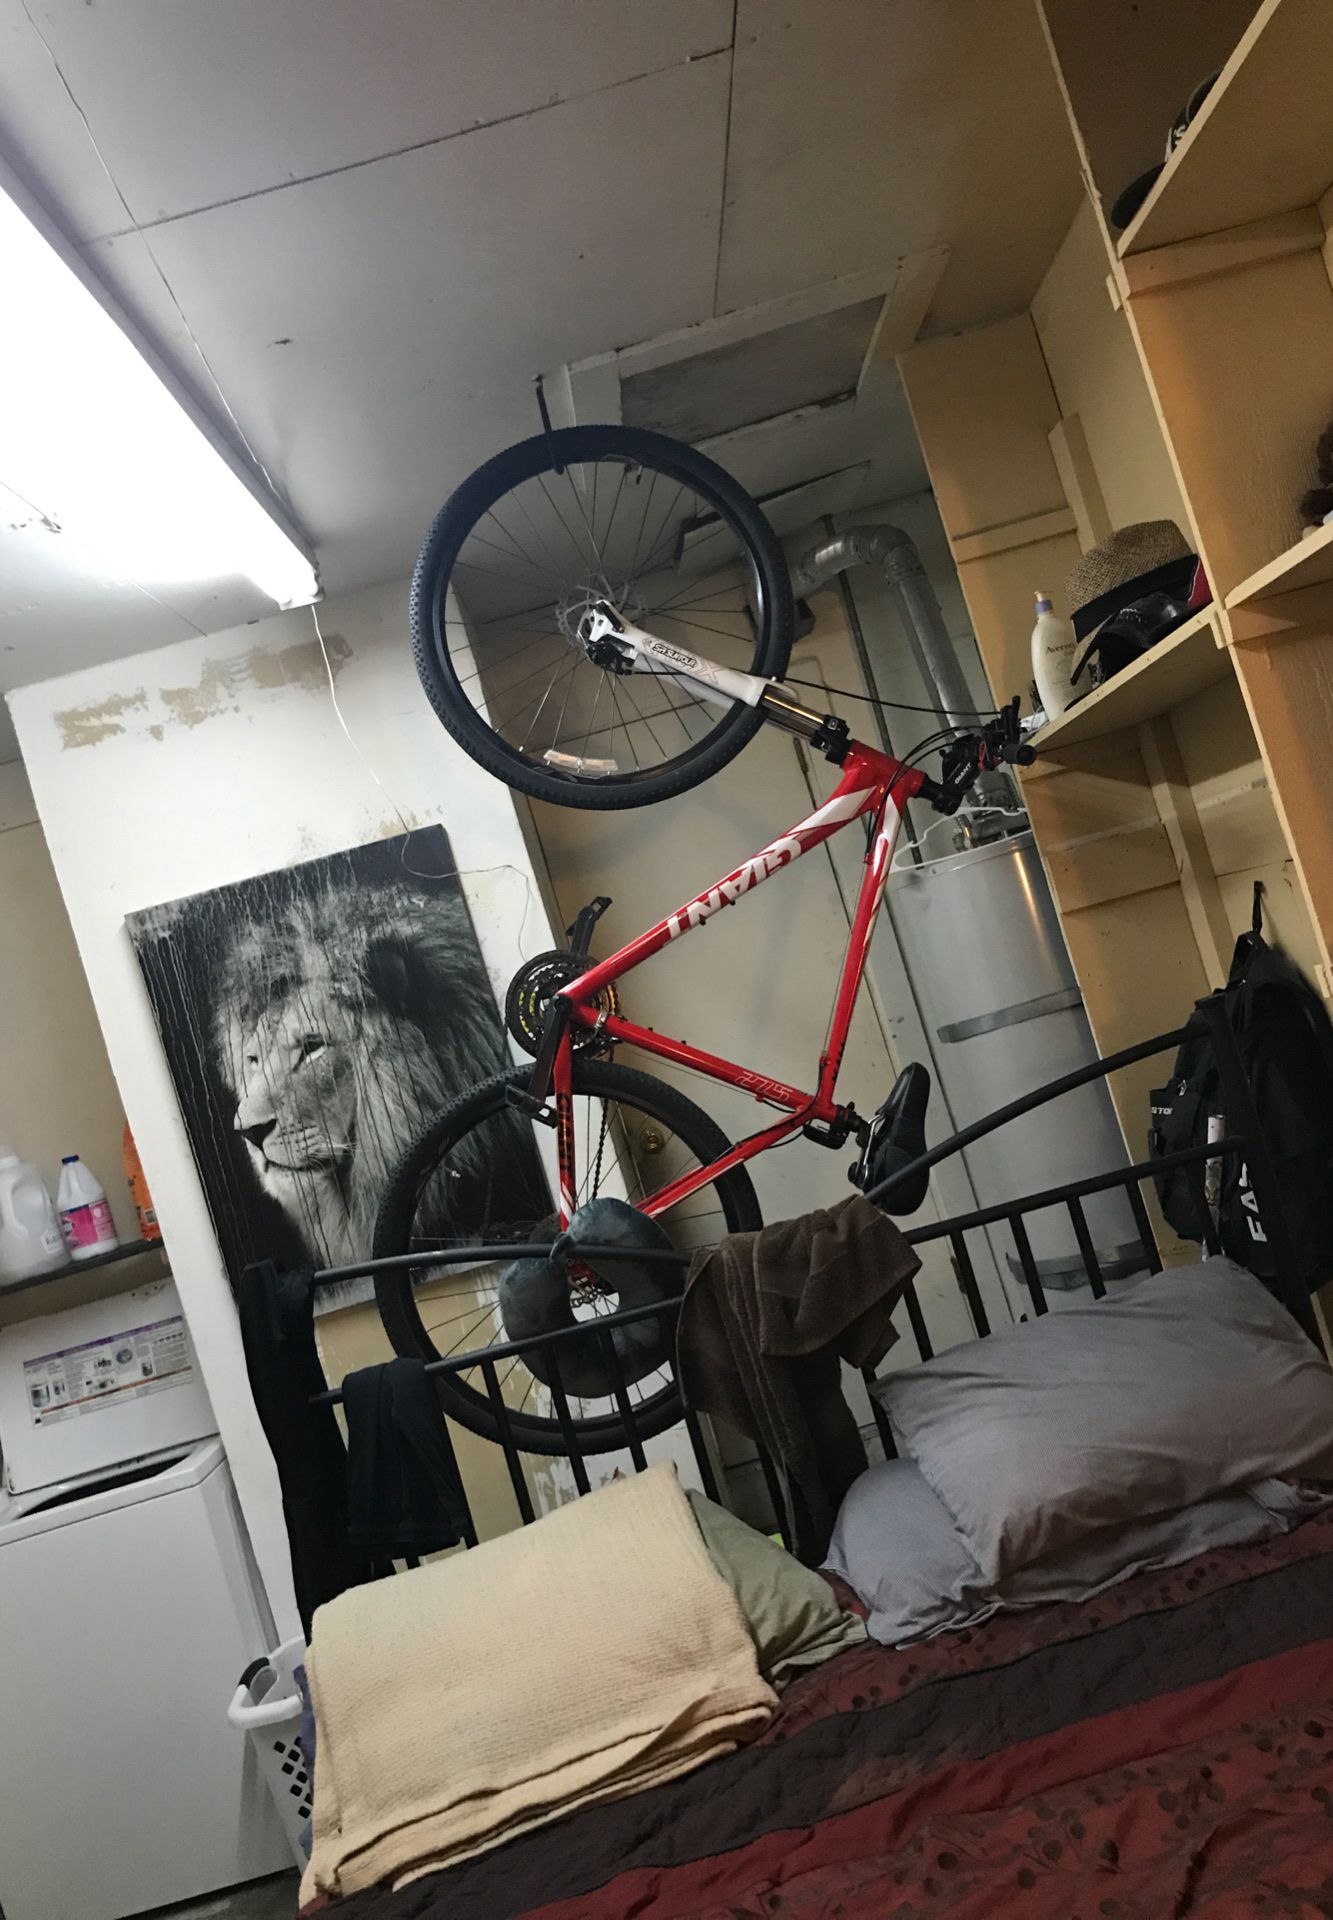 Men’s 27.5” Giant mountain bike